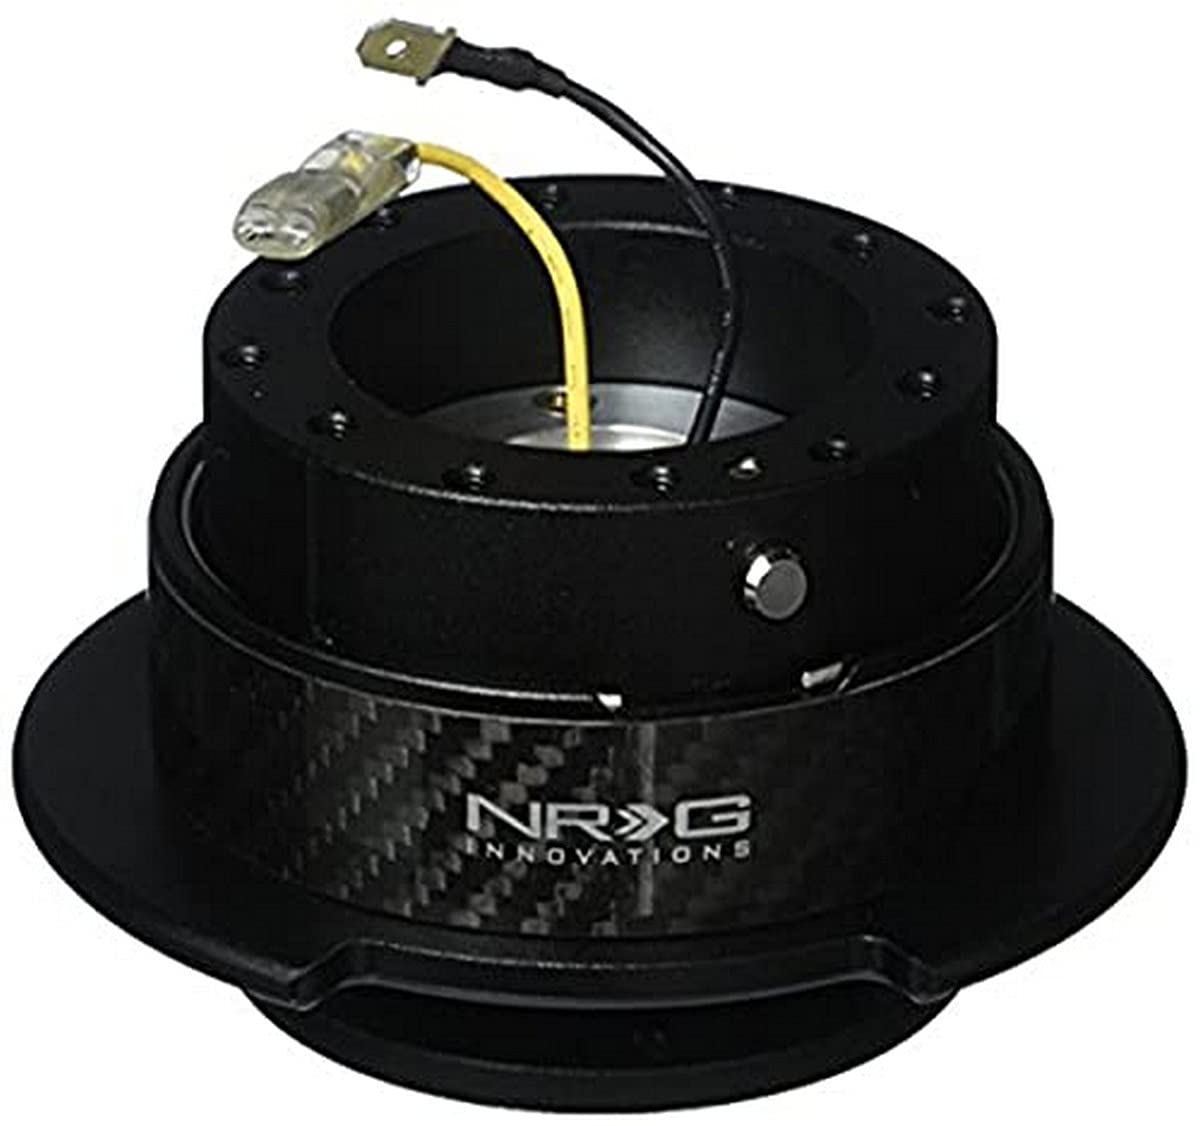 NRG Steering Wheel Quick Release Kit - Gen 2.5 - Black Body with Black/Carbon Fiber Ring - Part # SRK-250CF von NRG Innovations